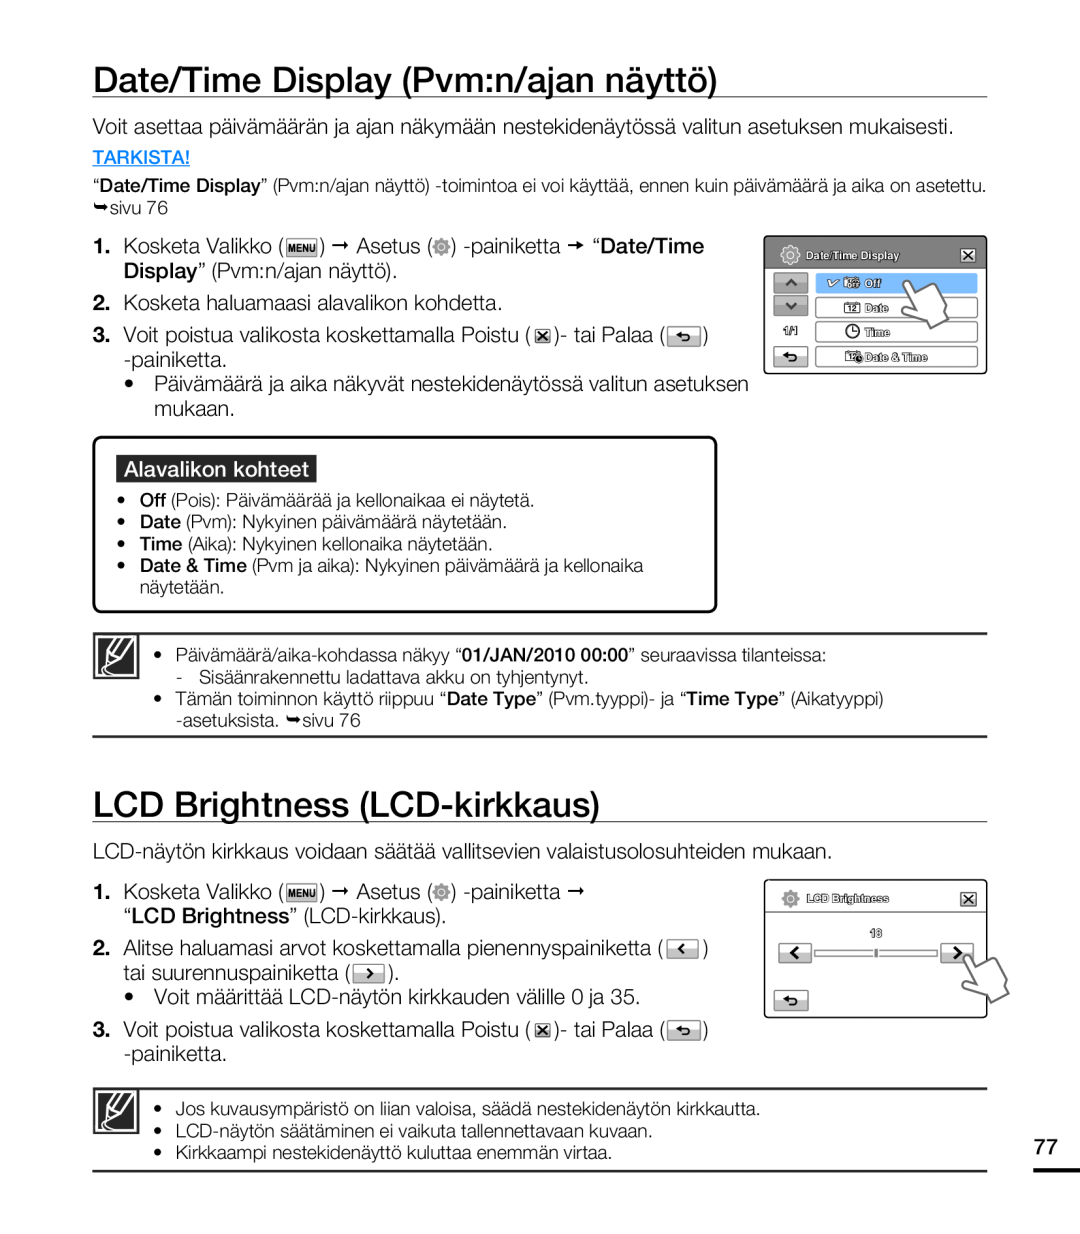 Samsung HMX-T10BP/EDC, HMX-T10WP/EDC Date/Time Display Pvmn/ajan näyttö, LCD Brightness LCD-kirkkaus, Alavalikon kohteet 